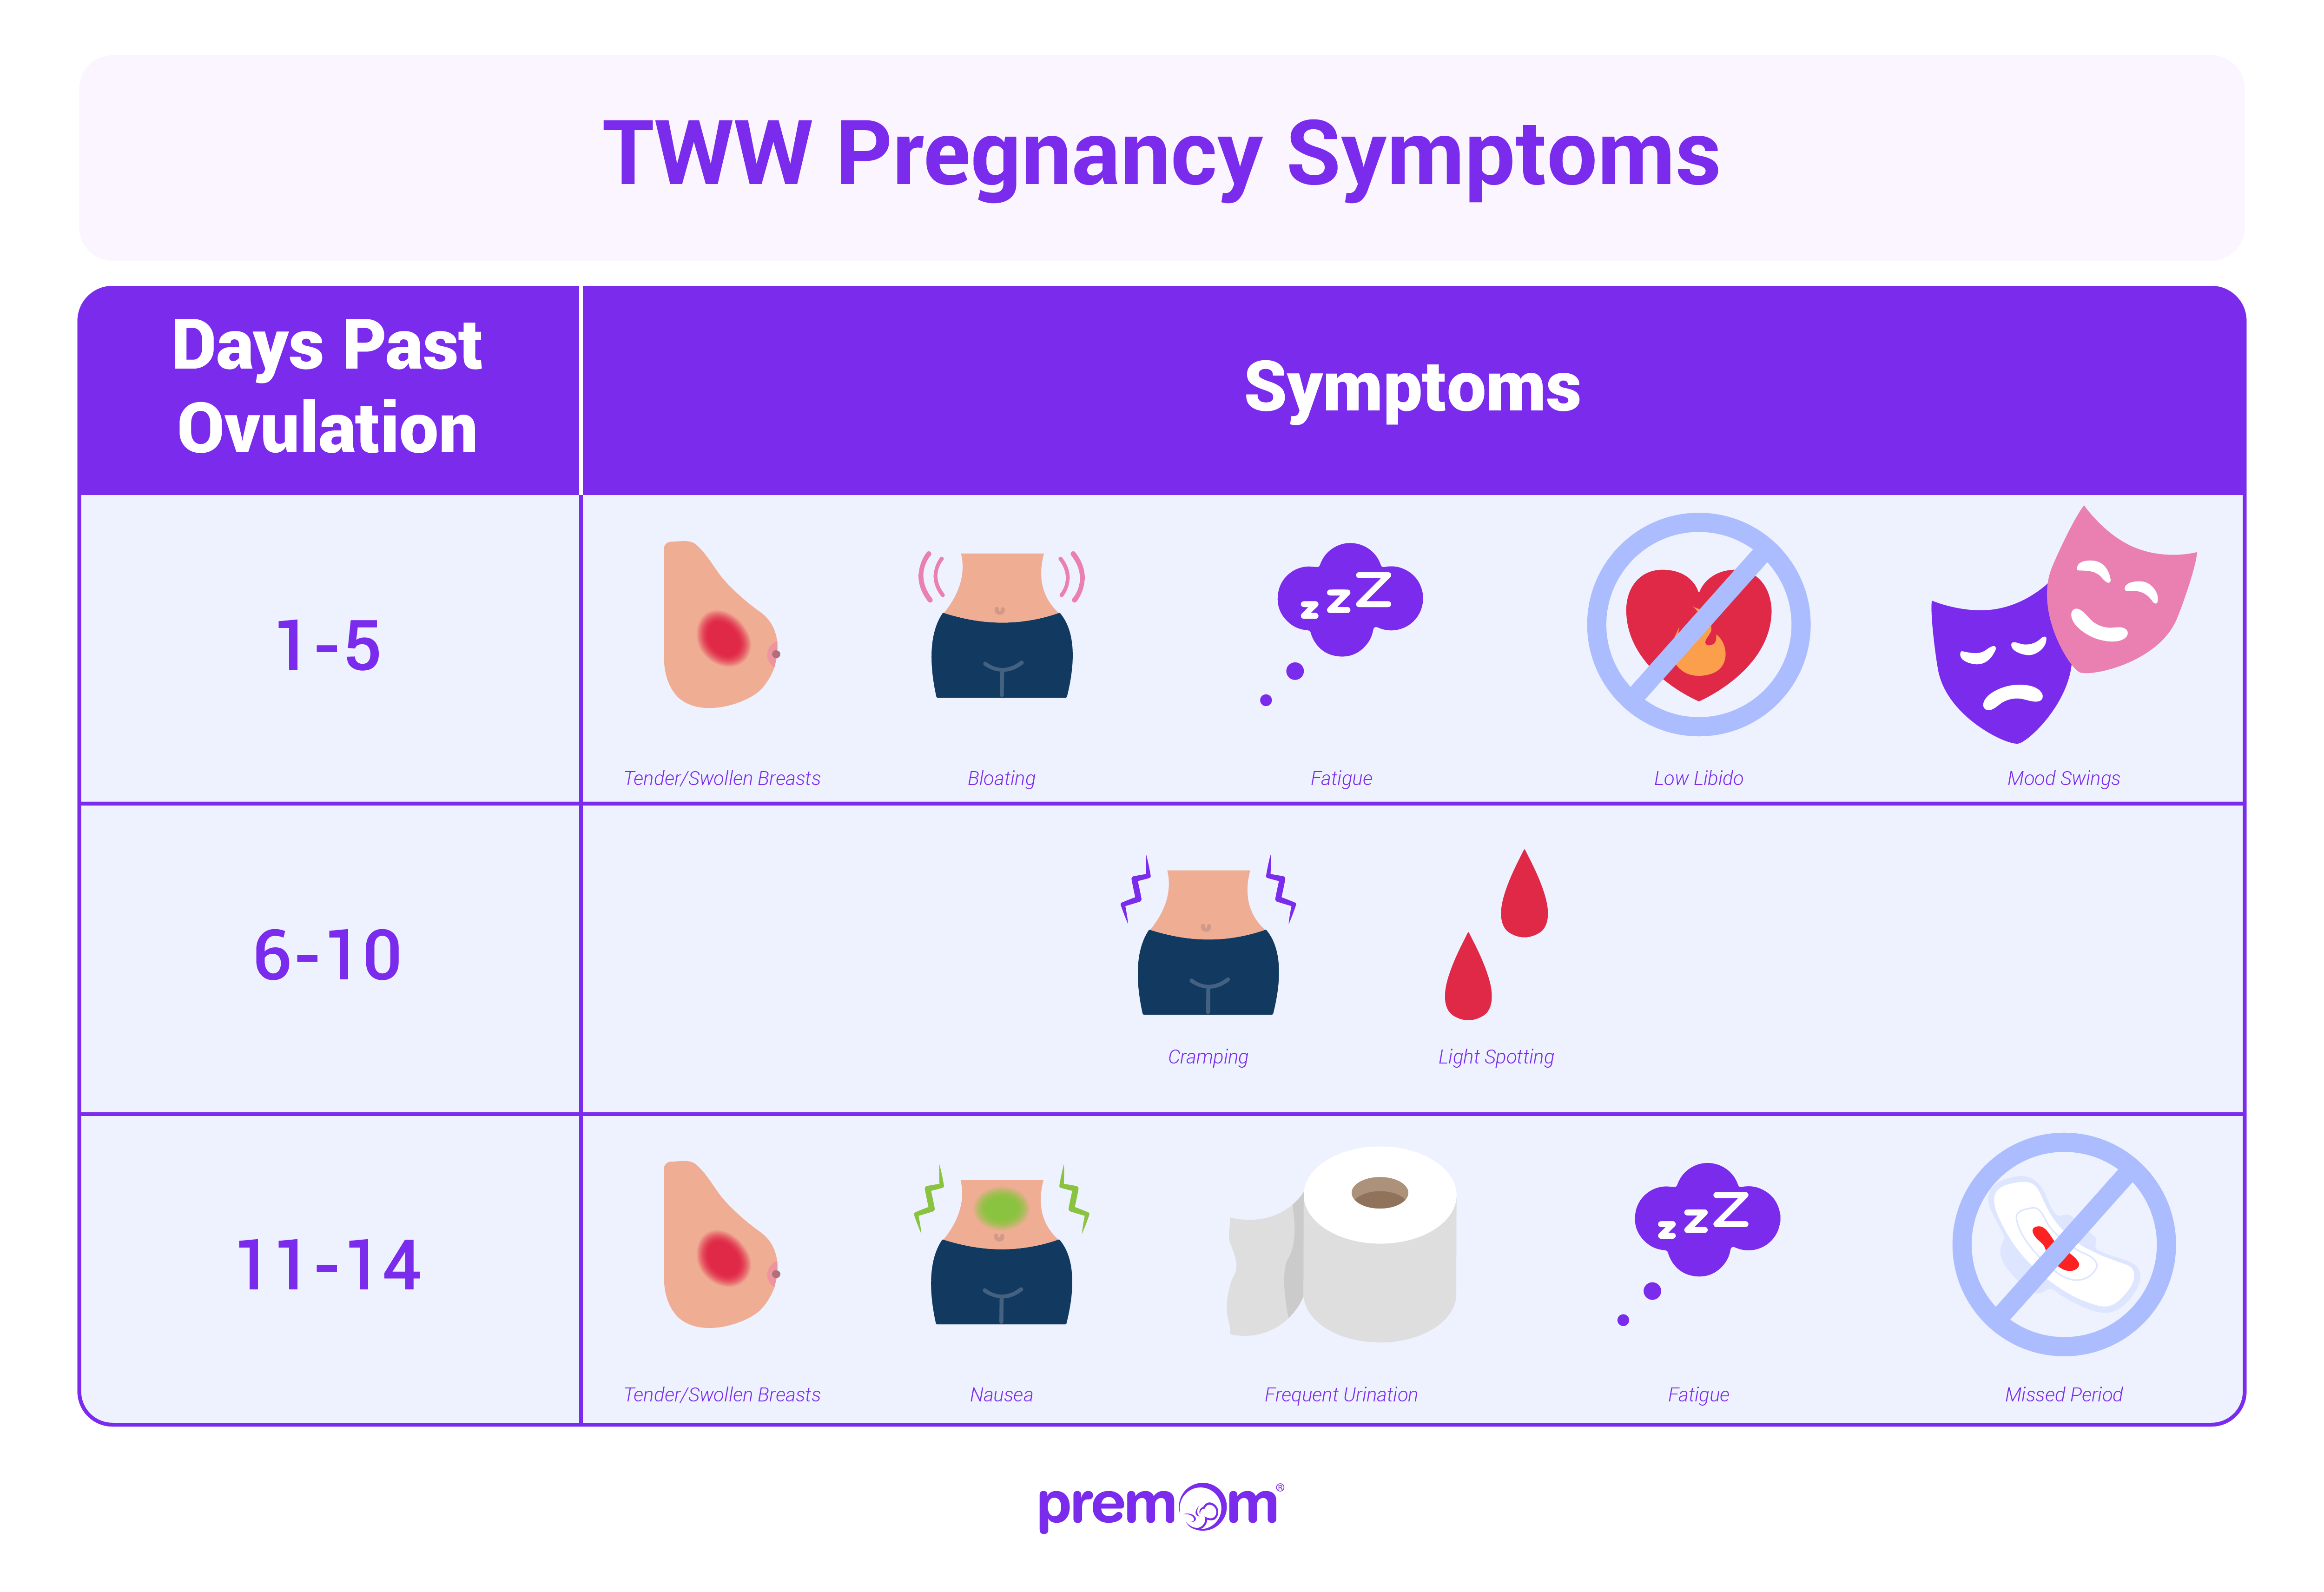 Two Week Wait Pregnancy Symptoms by DPO (Days Past Ovulation